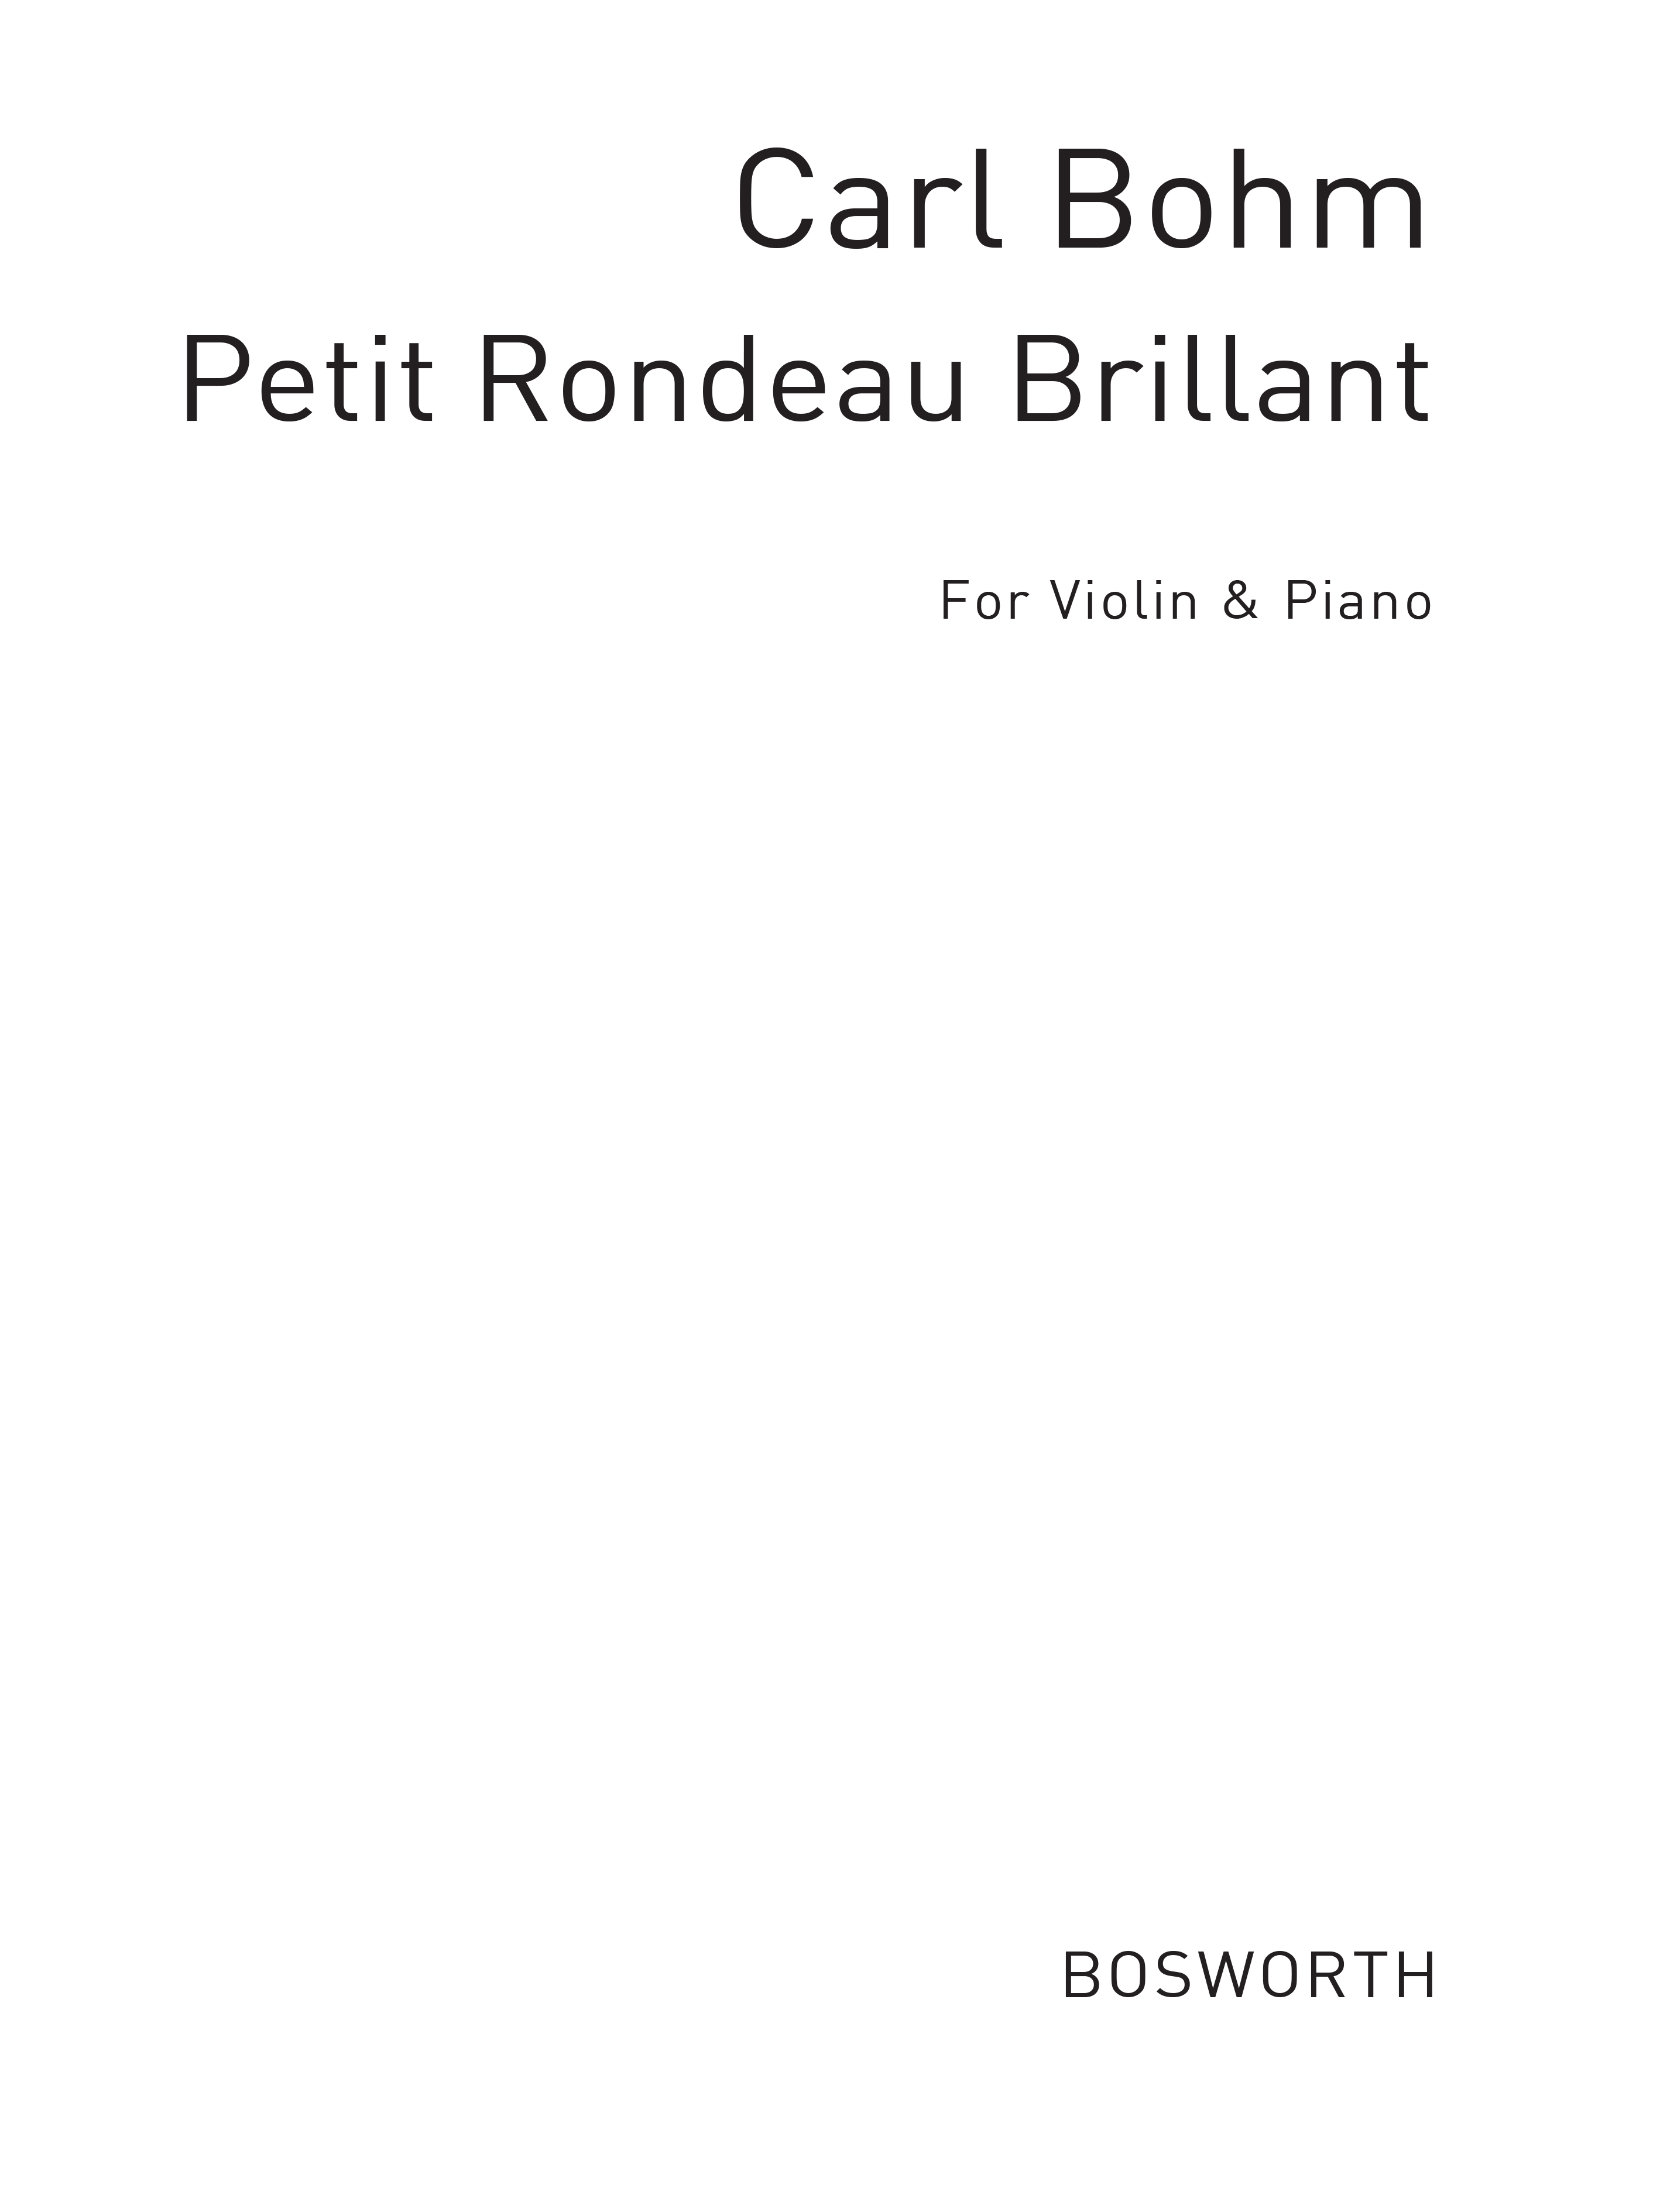 Carl Bohm: Carl Bohm: Petite Rondeau Brillant: Violin: Instrumental Work